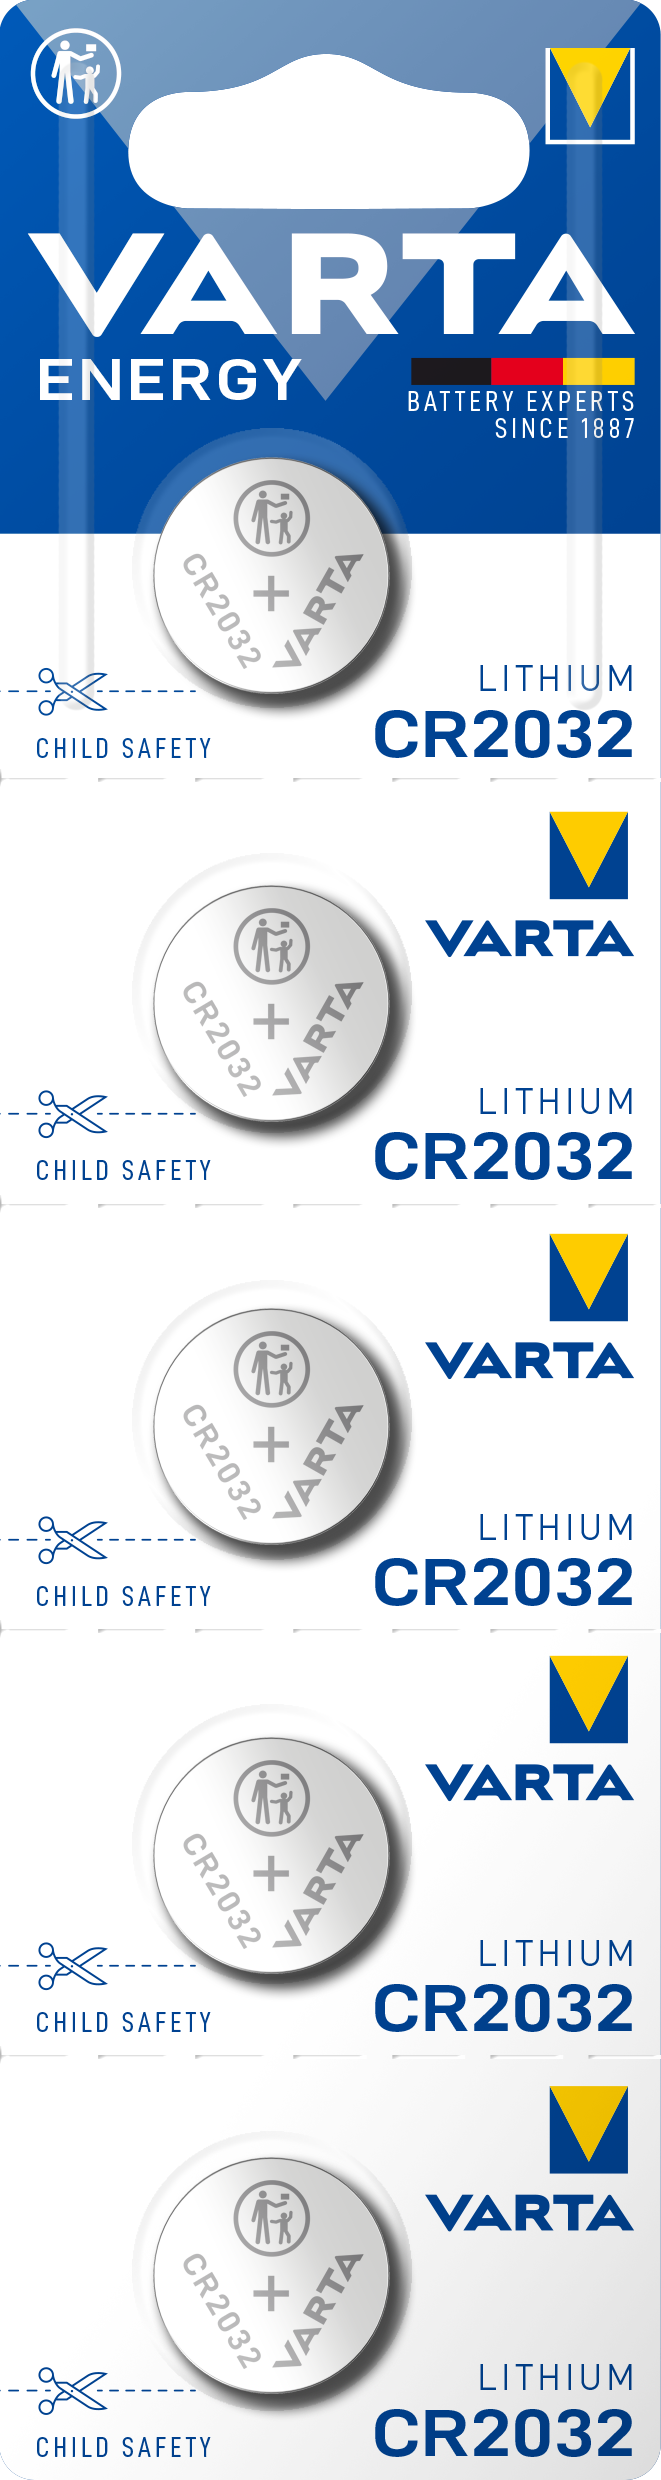 VARTA - Lithium - 2032 Pack of 5 Perforated